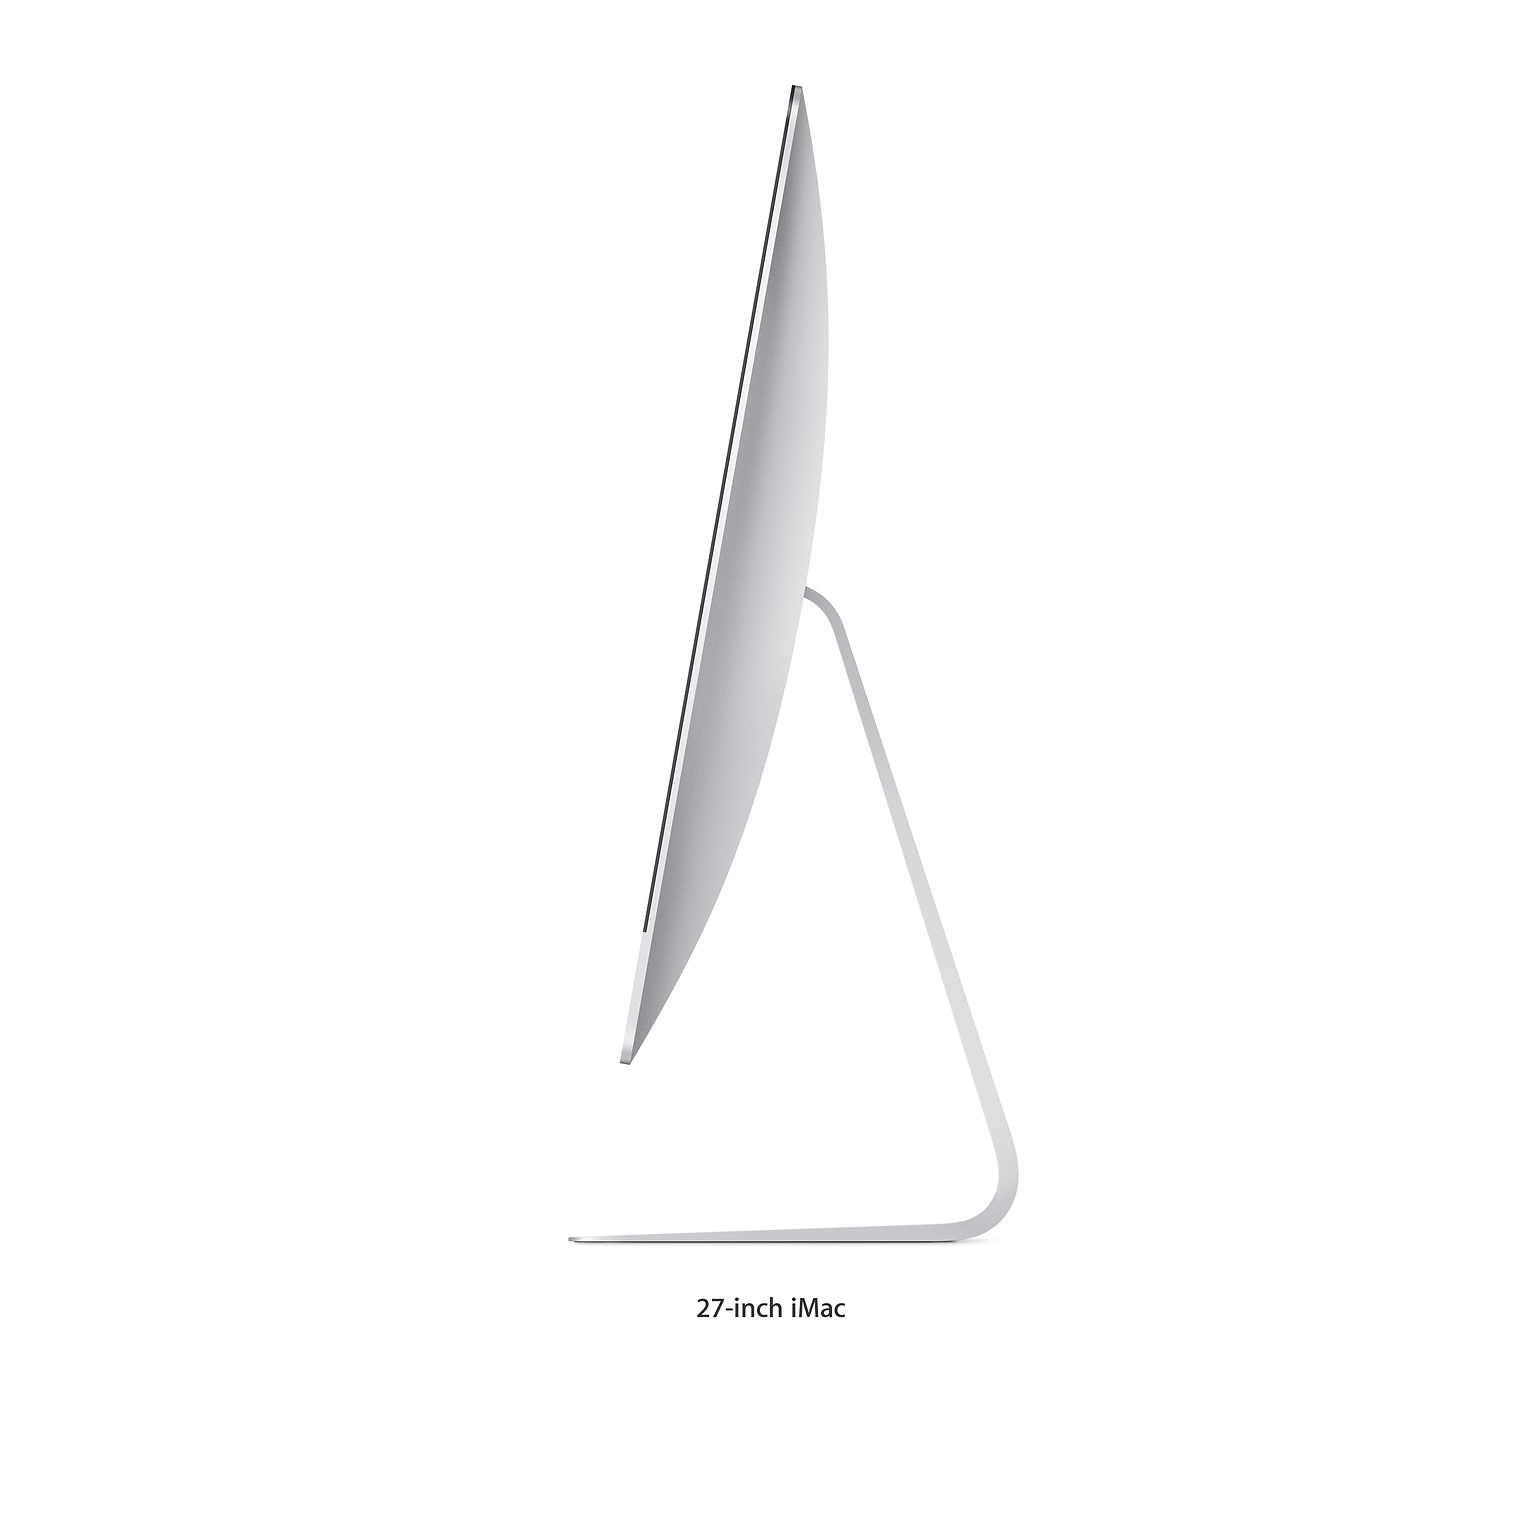 MHK23SA/A - iMac 21.5 inch 4K Retina 2020 - Intel Core i3 Gen 8 3.6GHz quad-core / 256GB